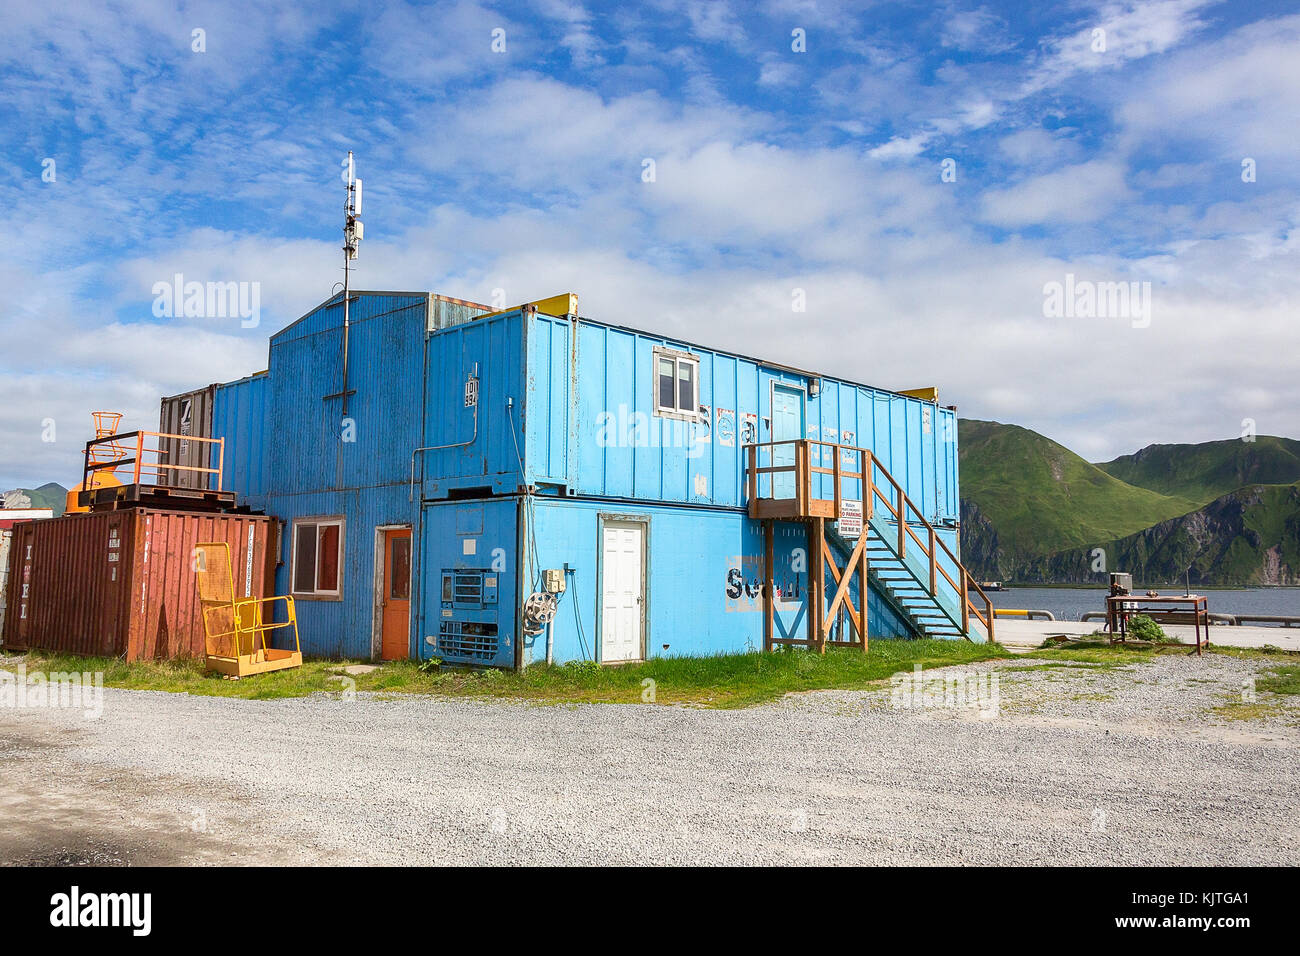 Dutch Harbor, Unalaska, Alaska, USA - August 14th, 2017: A Ship Container house at Airport Beach road, Unalaska, Alaska. Stock Photo